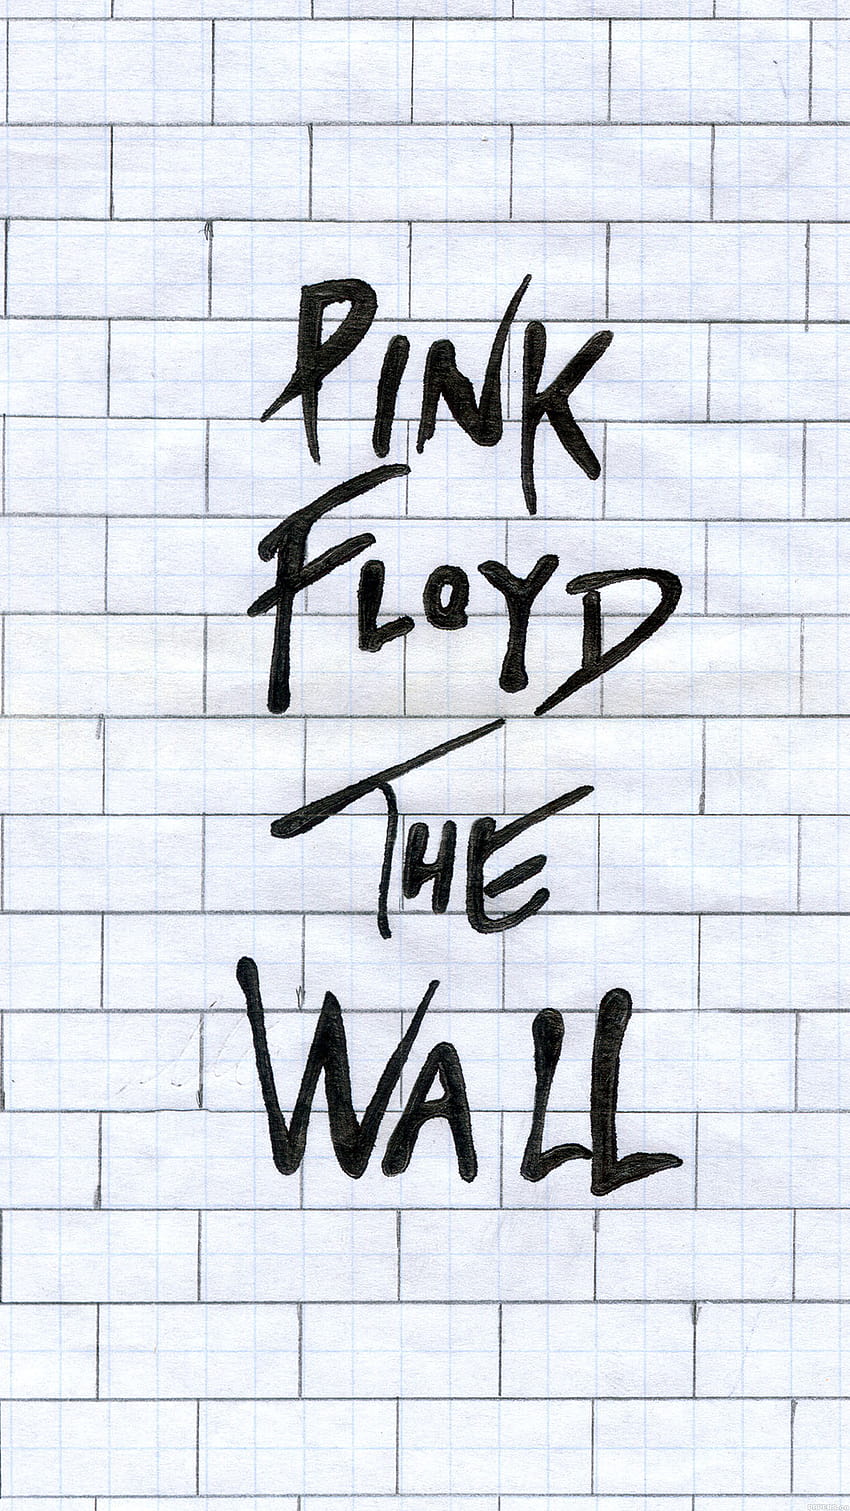 The Wall Pink Floyd, band pink floyd wallpaper ponsel HD